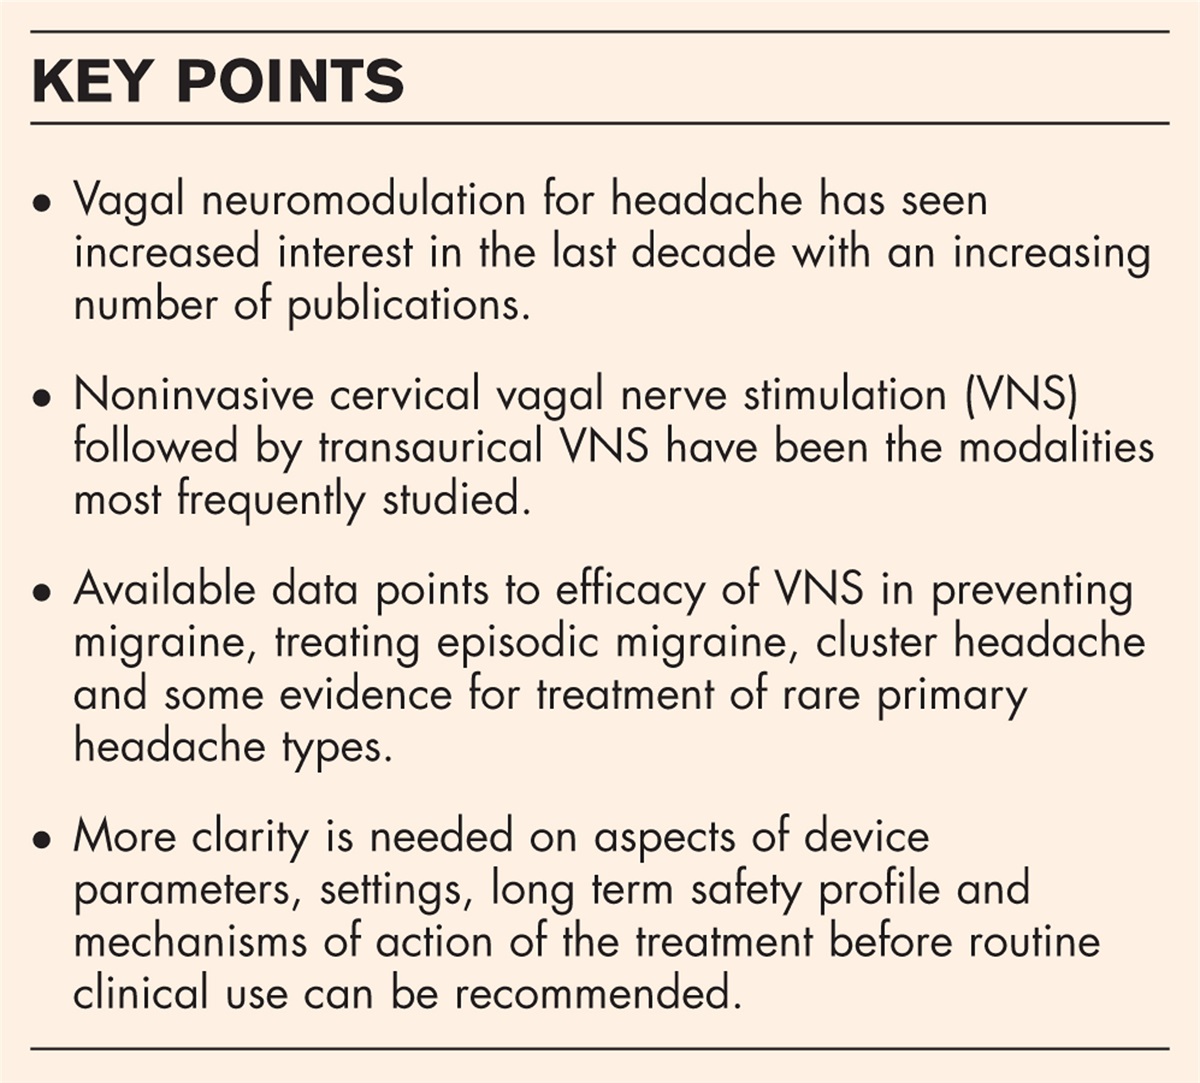 Vagal nerve stimulation for headache